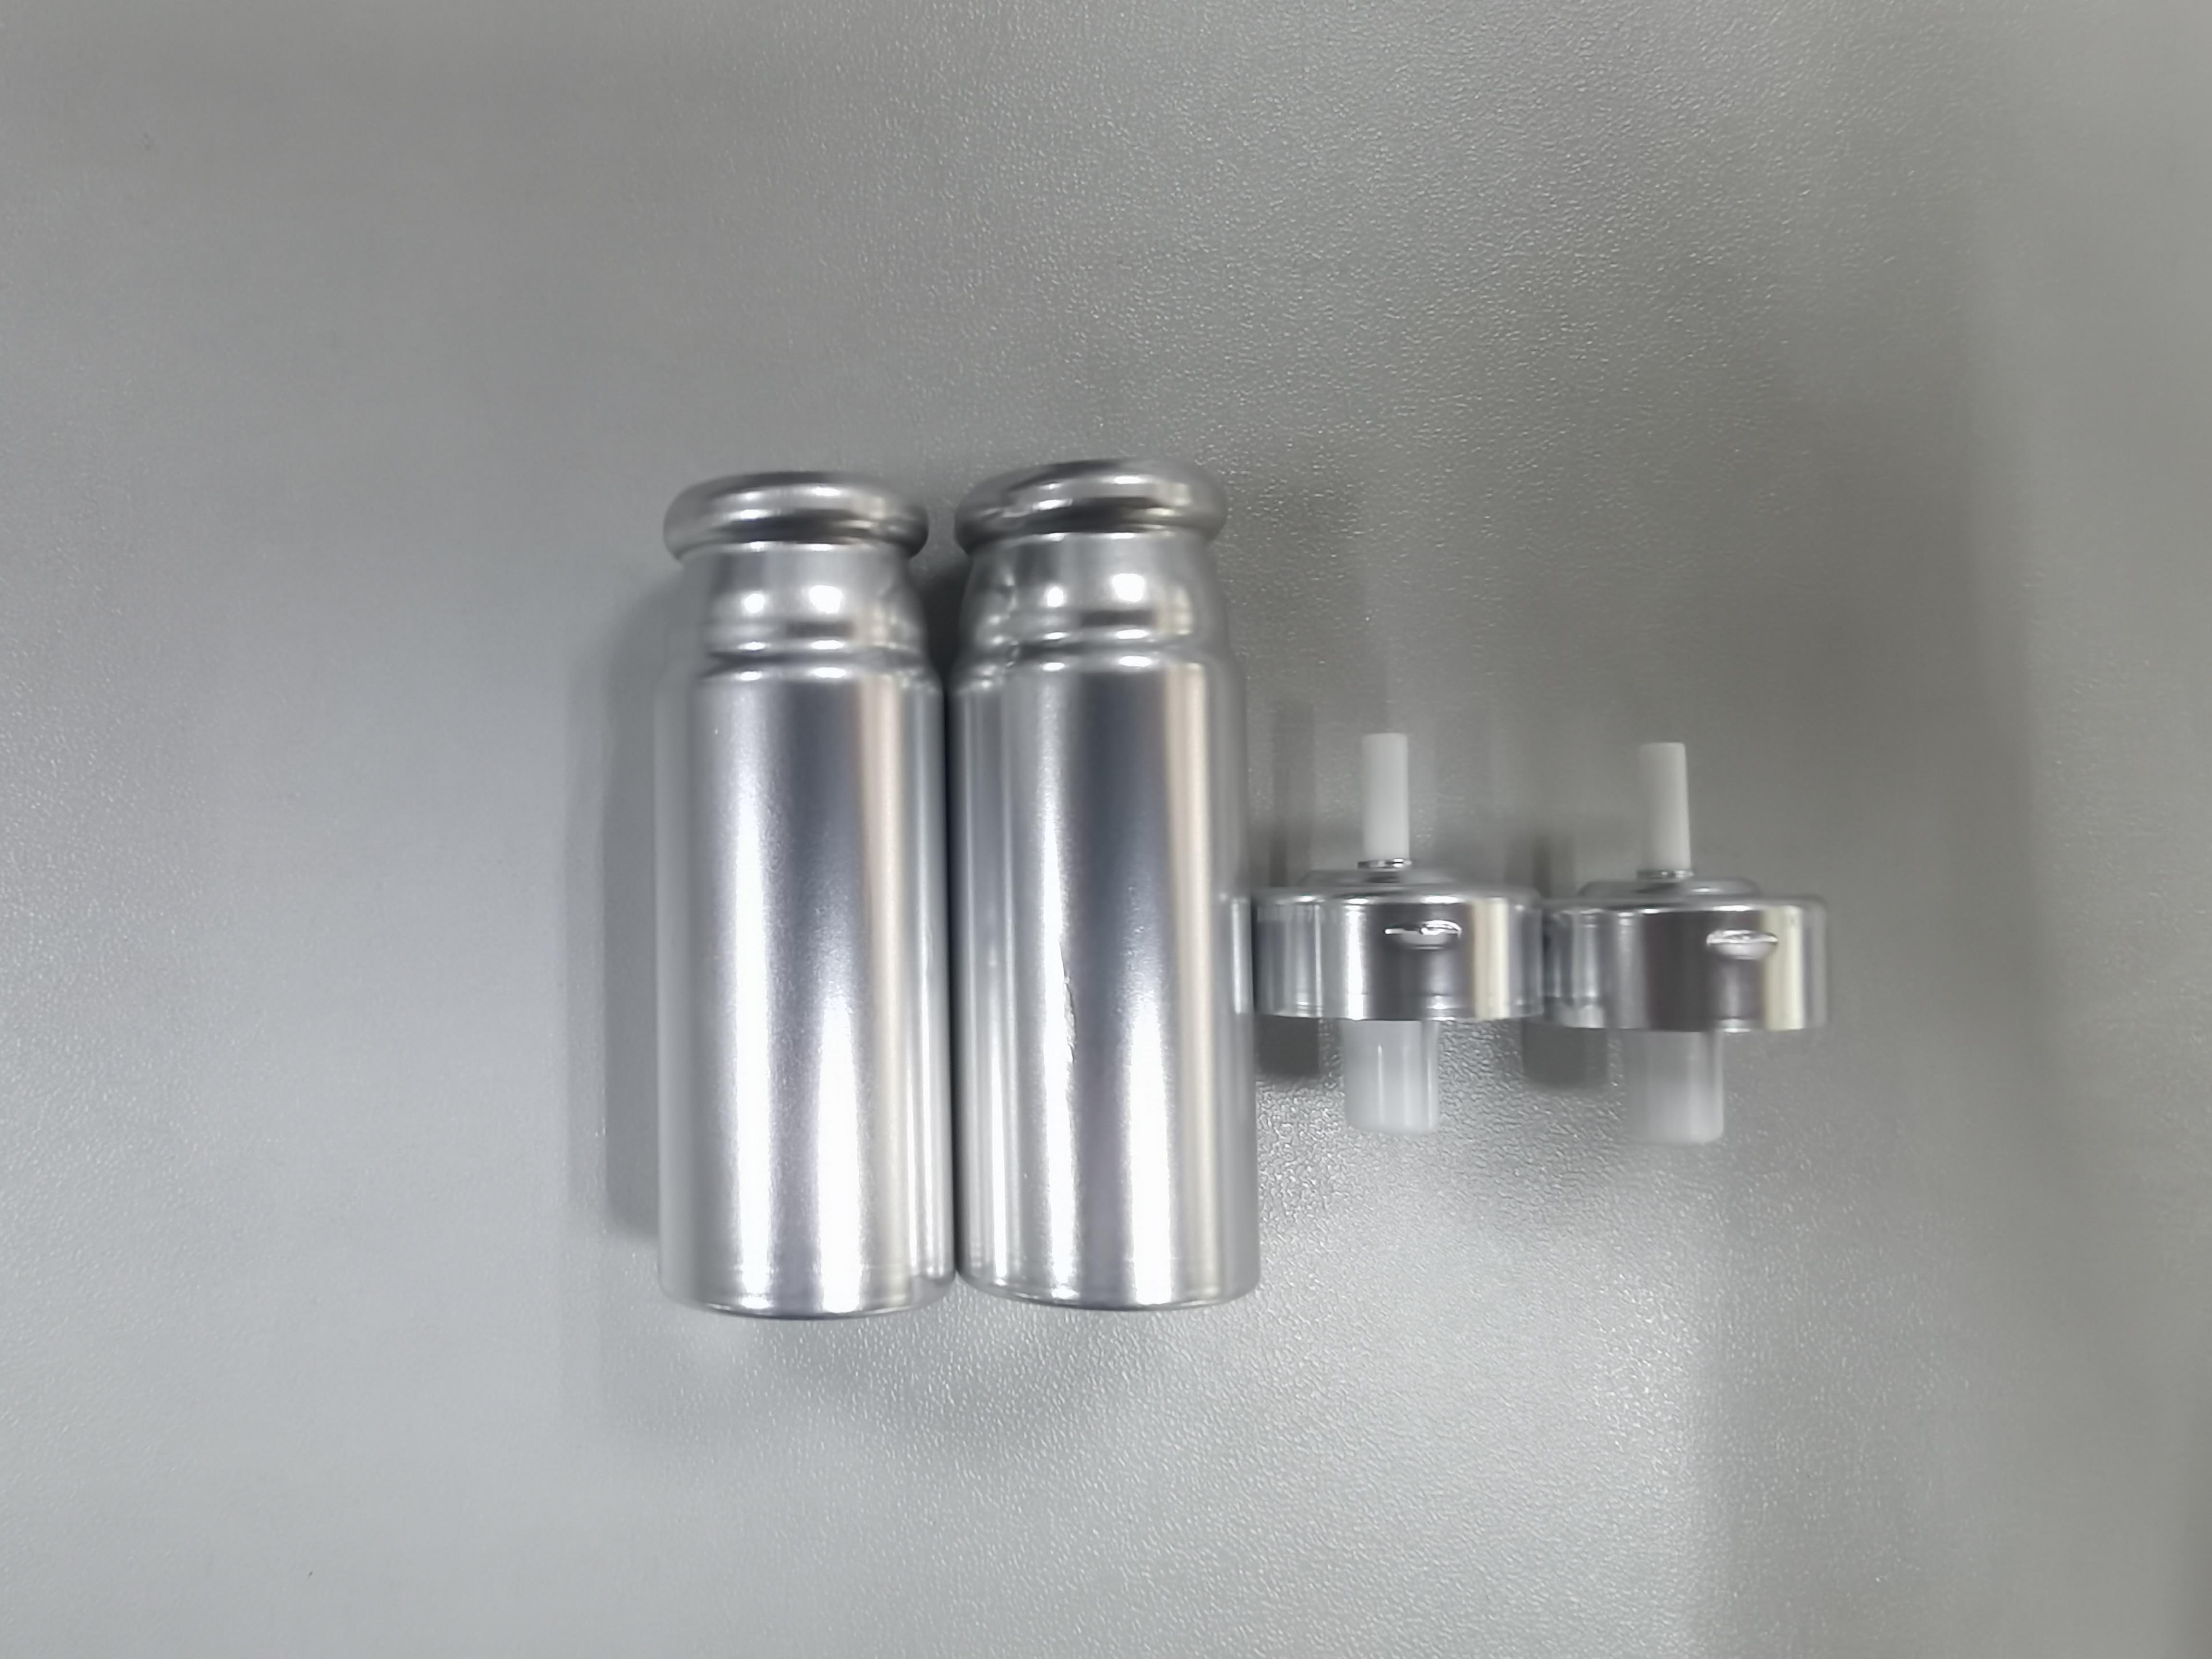 Inhaler components (Can, Valve, Actuator)